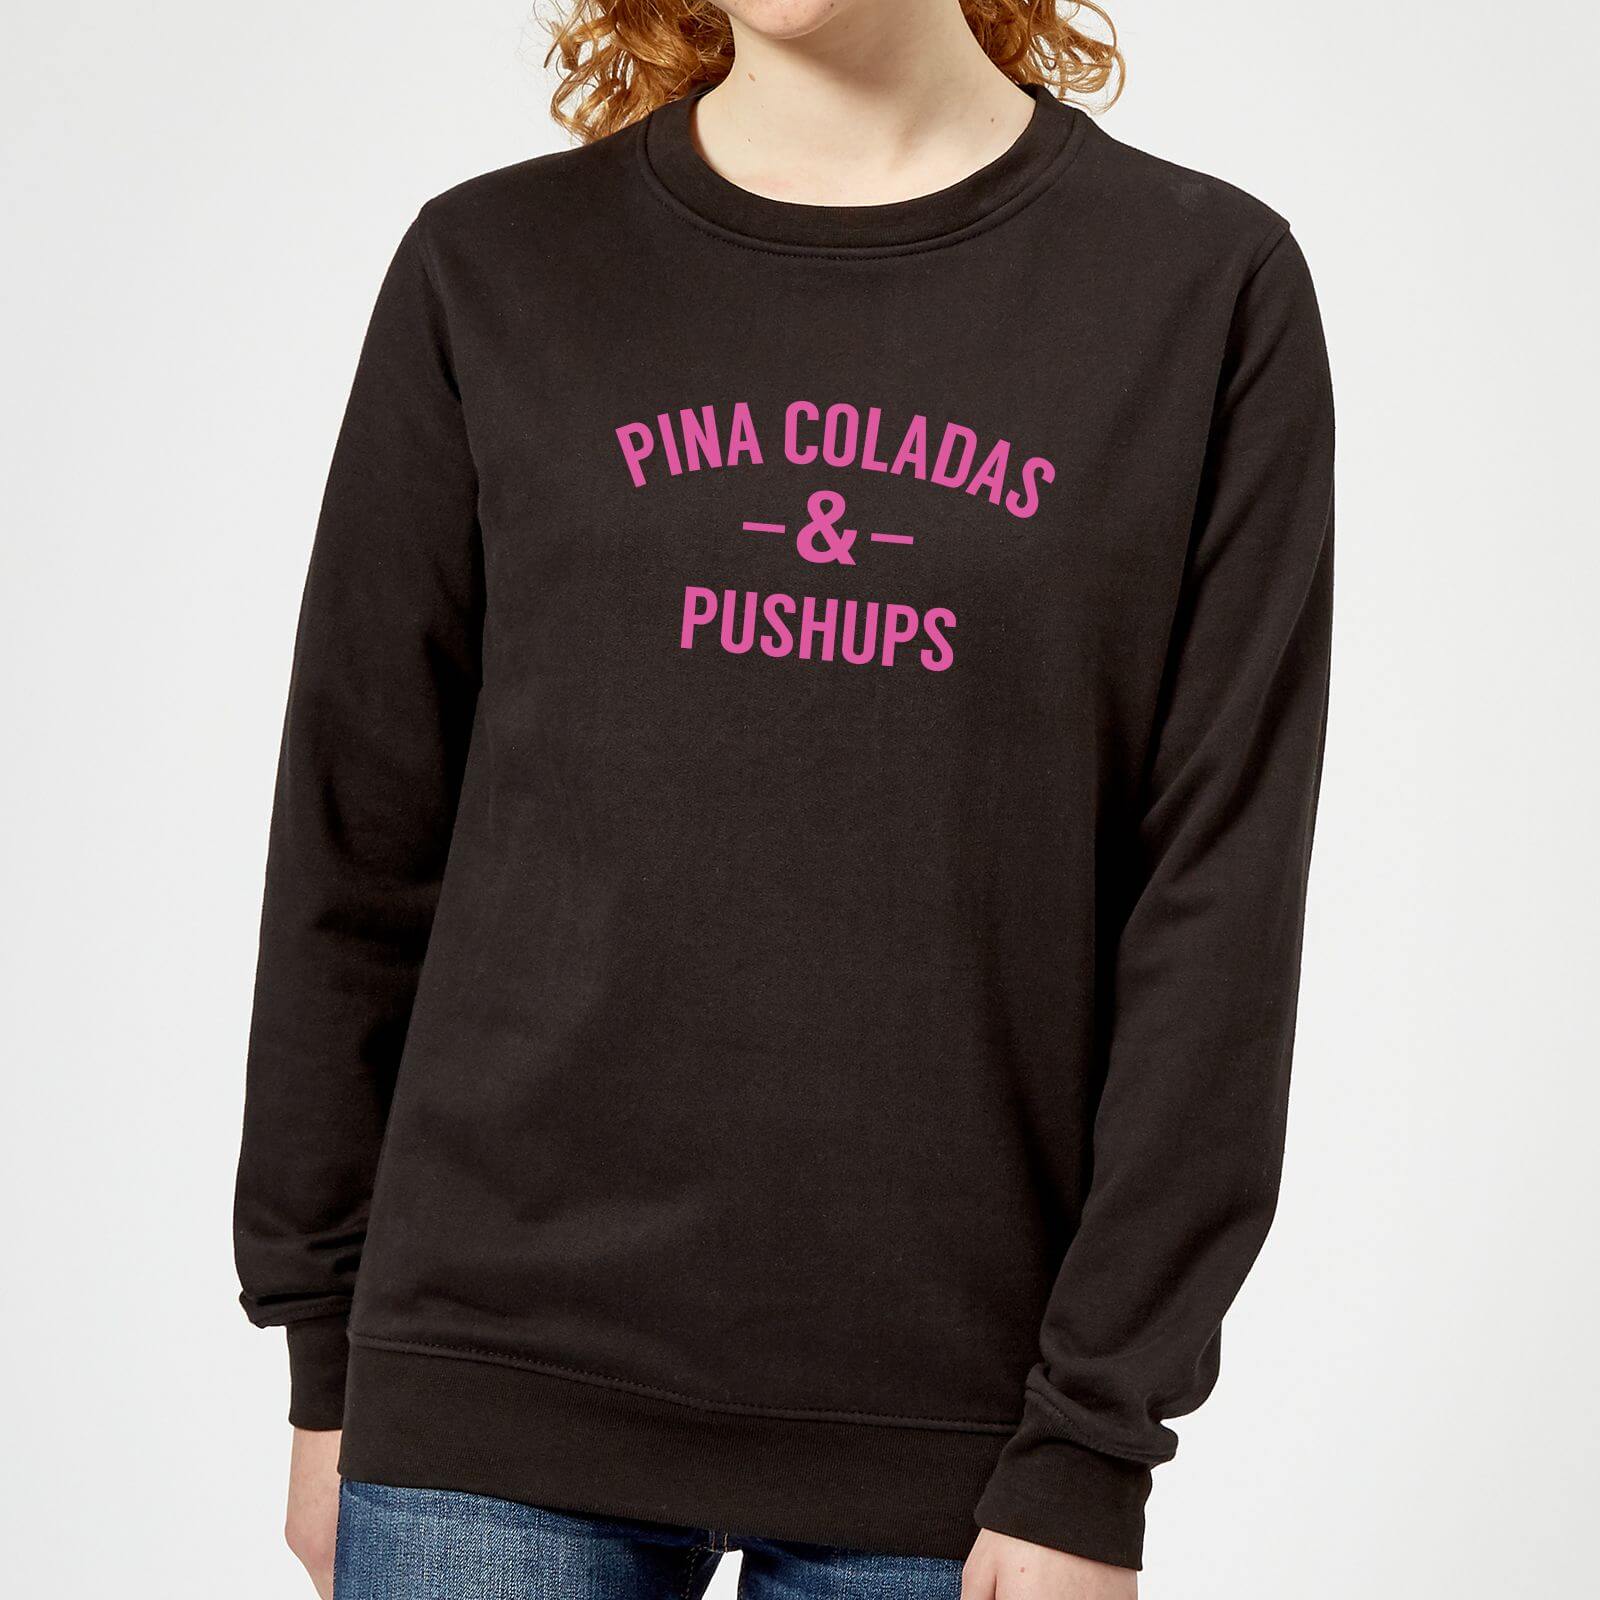 Pina Coladas and Pushups Women's Sweatshirt - Black - 5XL - Black